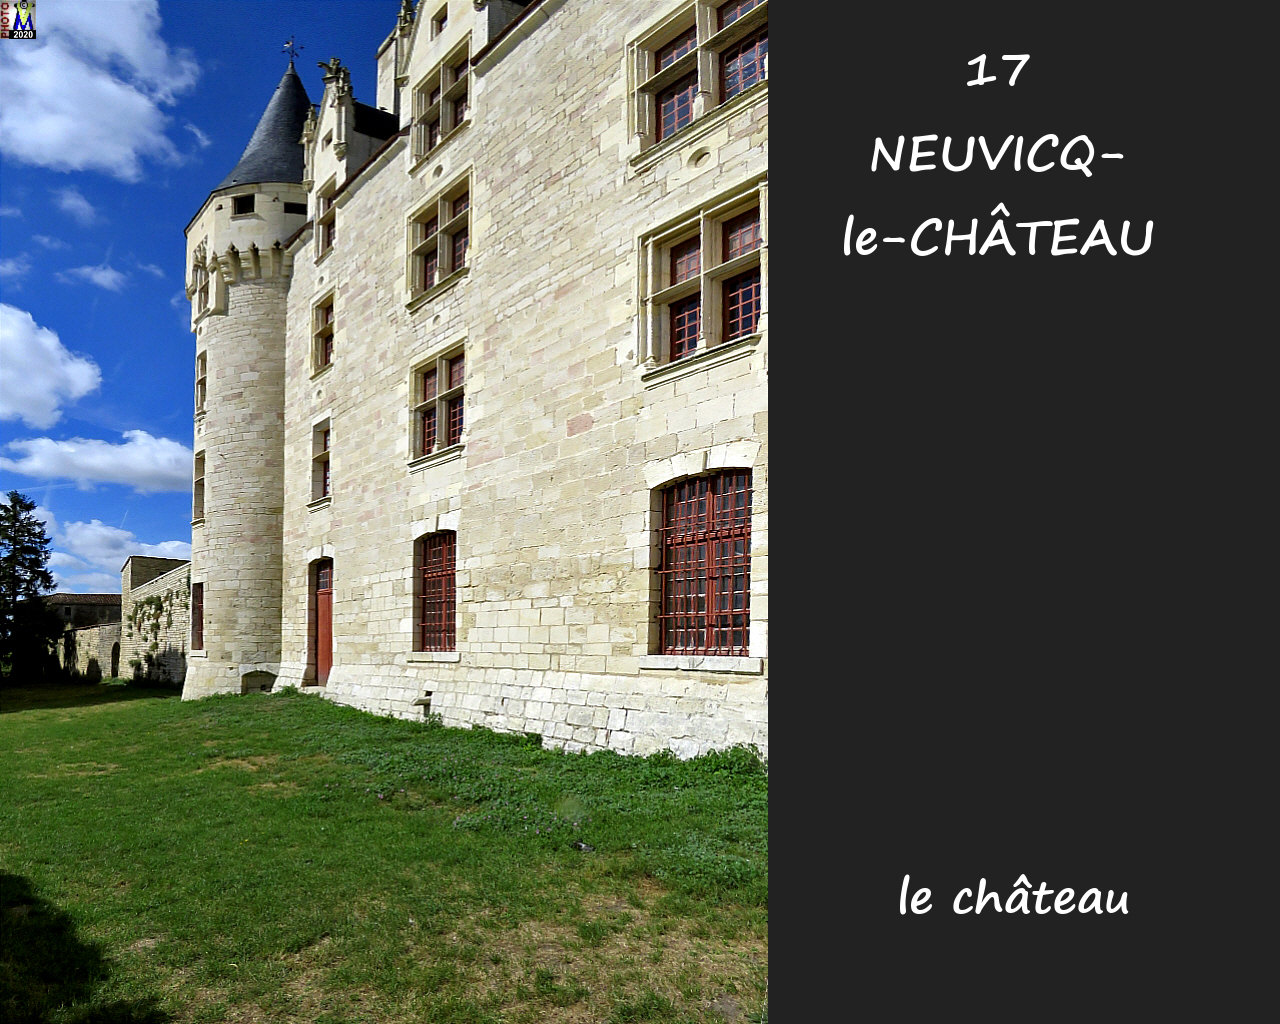 17NEUVICQ-CHATEAU_chateau_1012.jpg